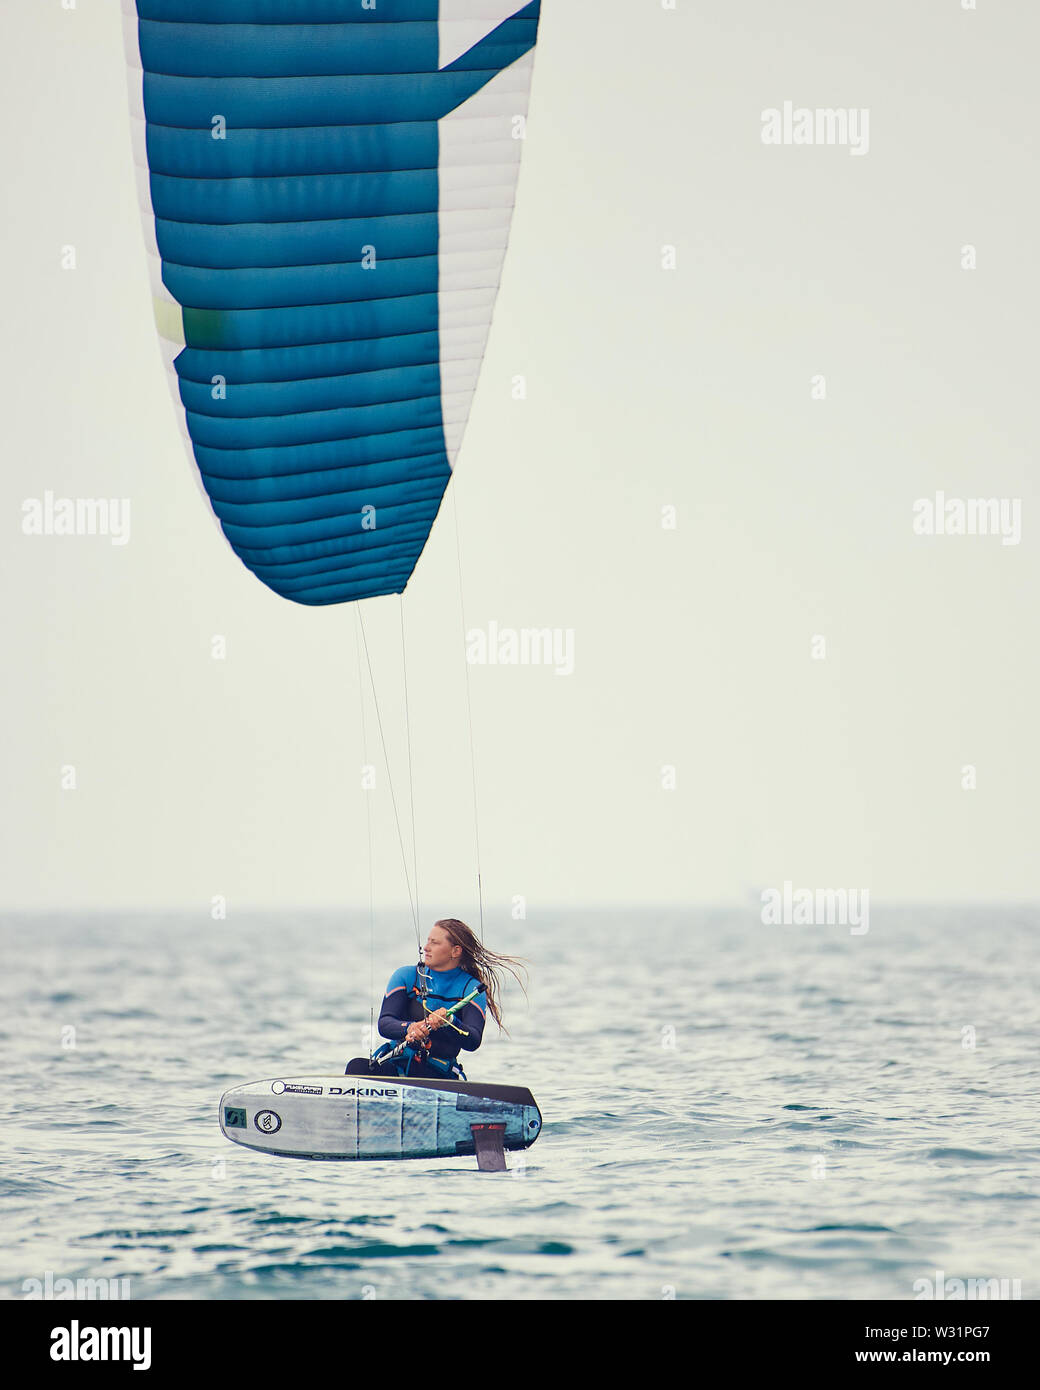 Armada Kiteboarding festival. Woman powering across the water on foils. Stock Photo